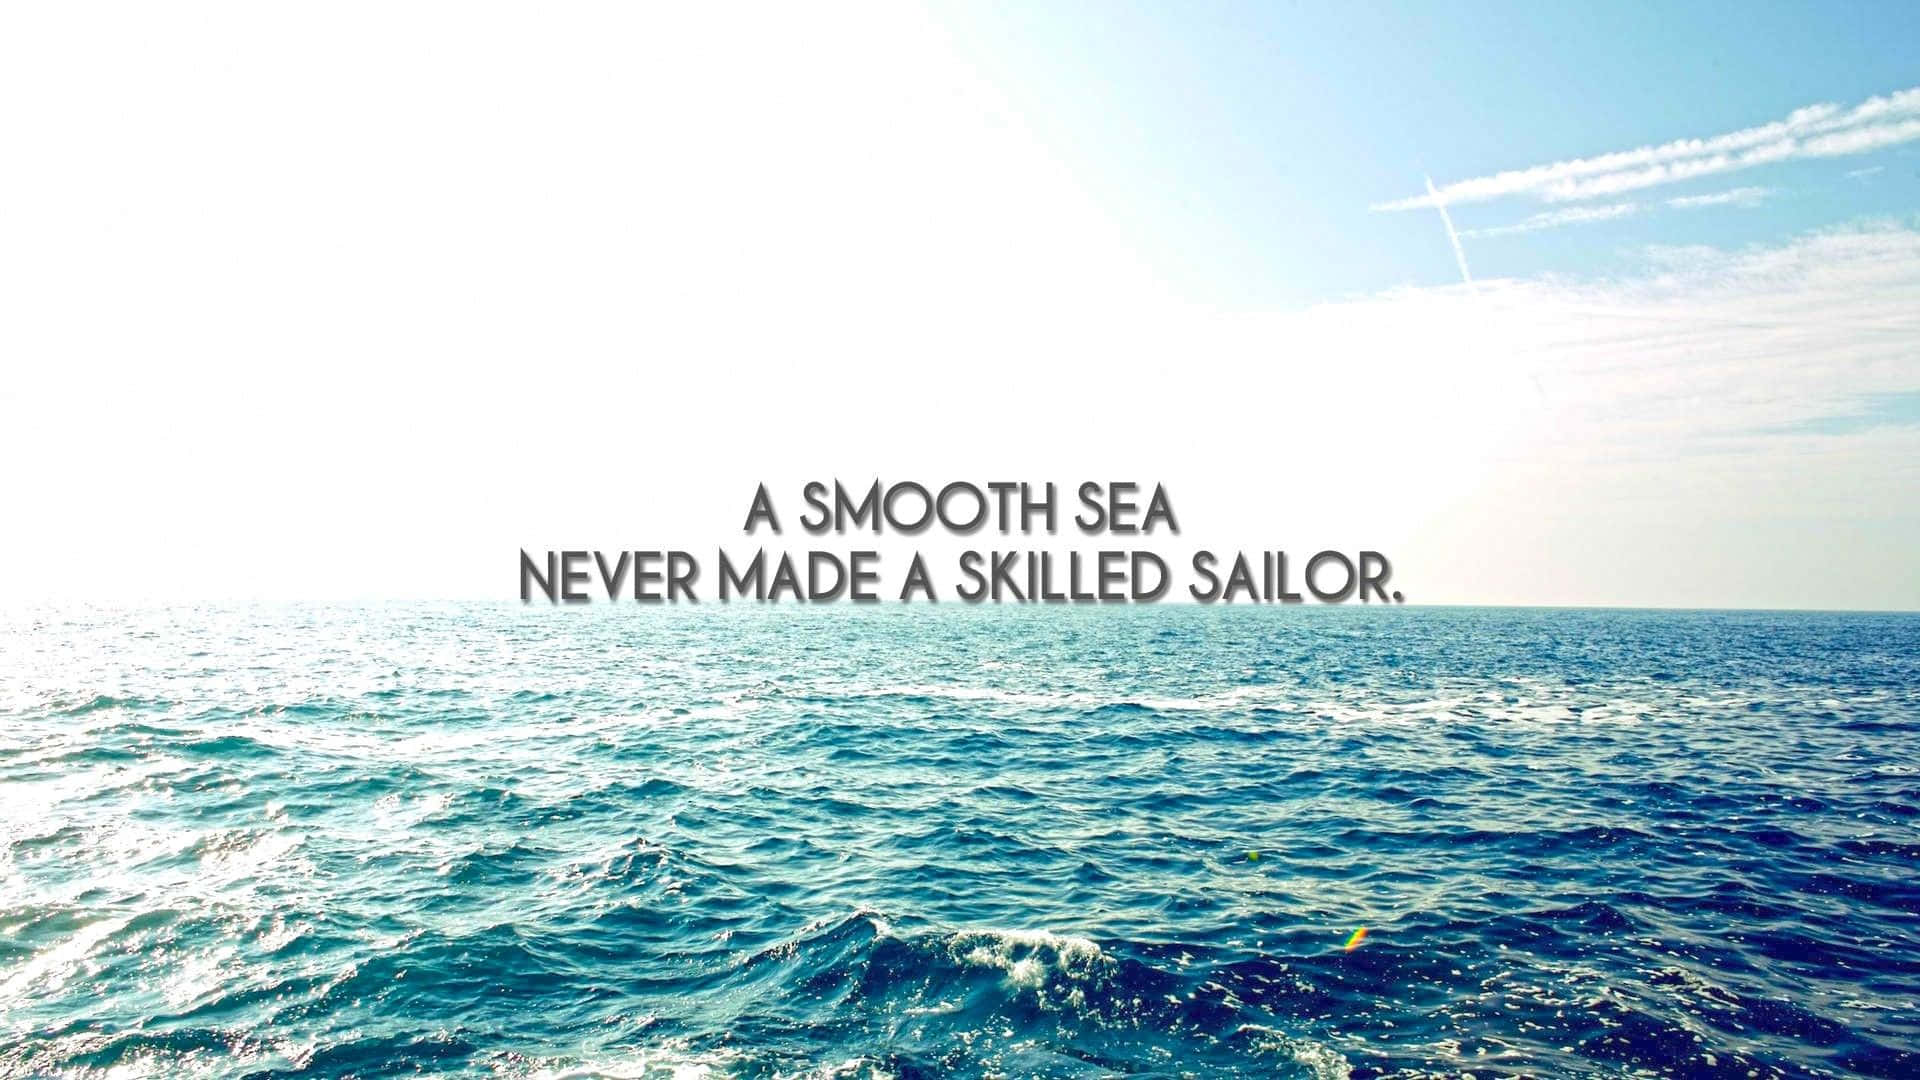 A Smooth Sea Never Made A Killed Sailor